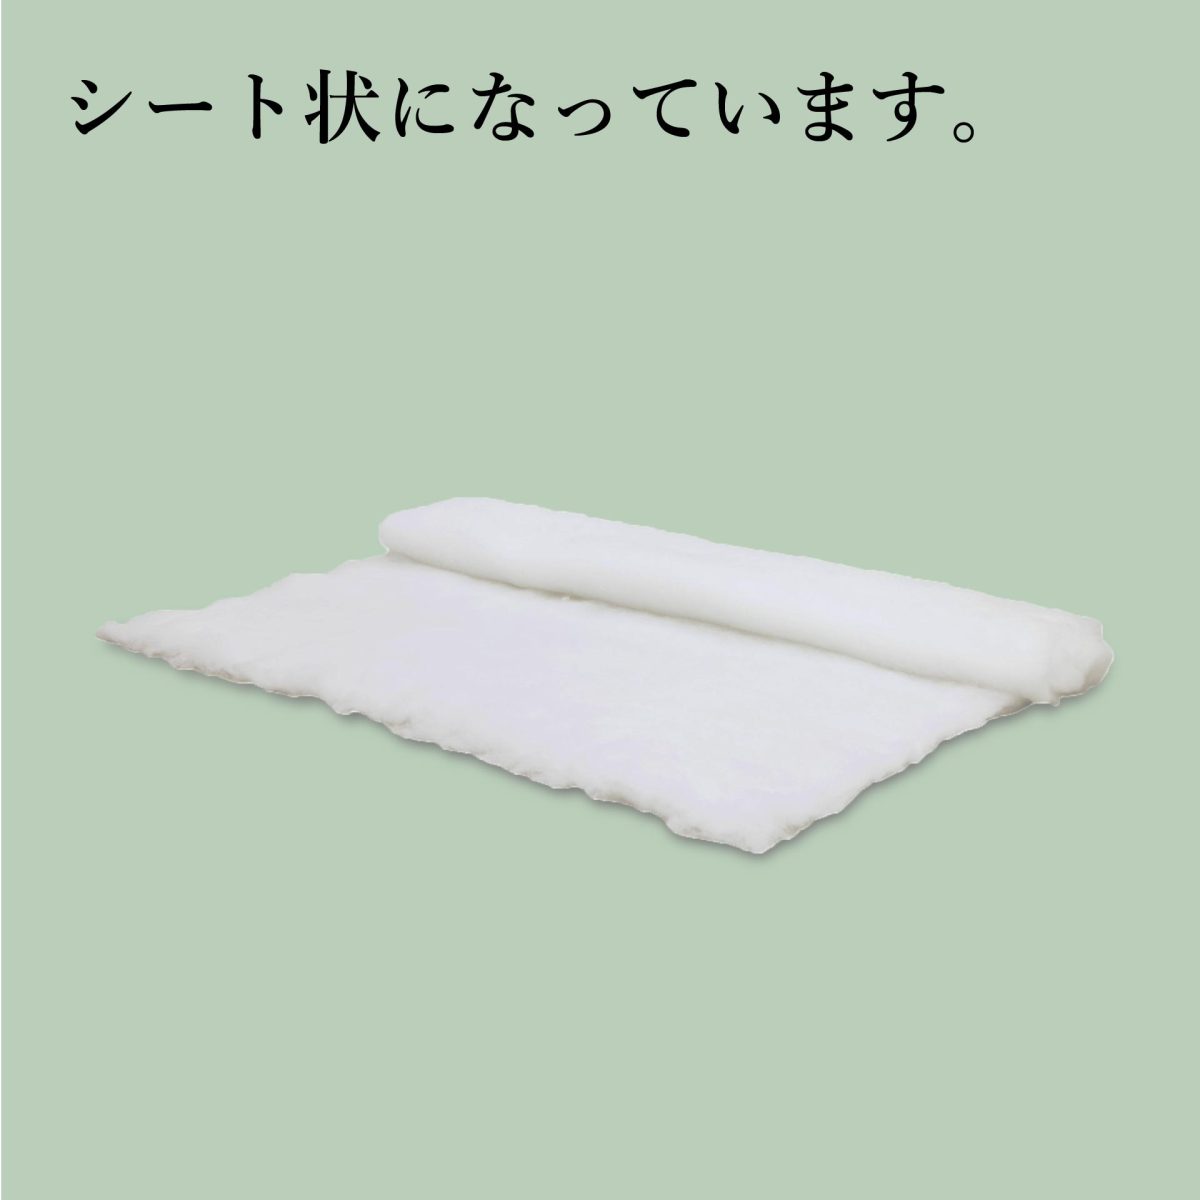  handicrafts cotton 300g made in Japan regular 5 piece supplement for seat type soft toy cushion handicrafts cotton plant 